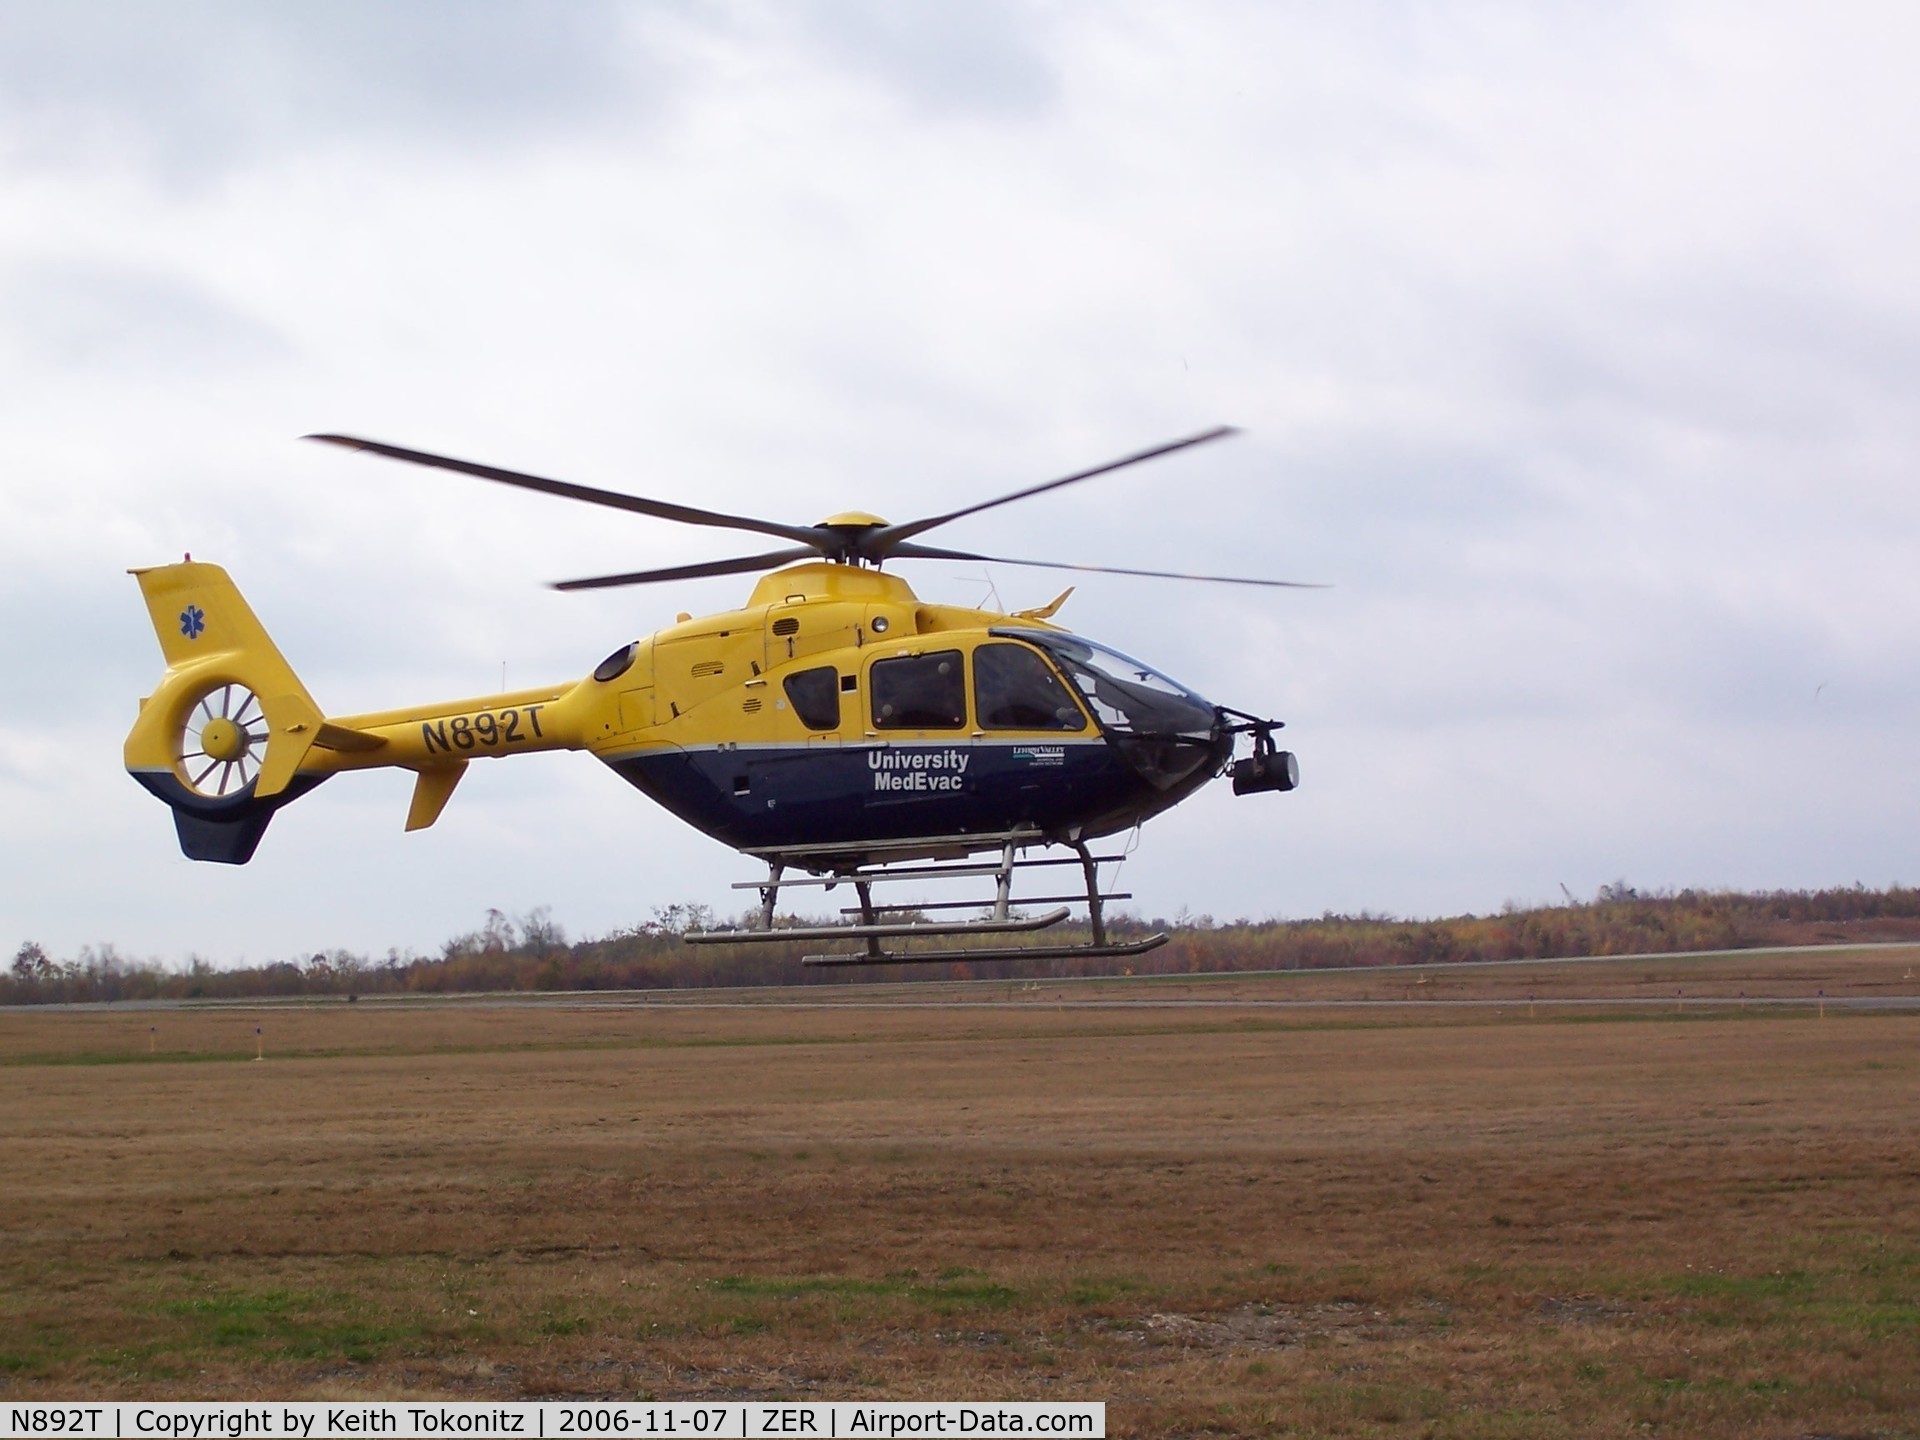 N892T, 1998 Eurocopter EC-135T-1 C/N 0052, University MedEvac 7, Schuylkill County Pa.  Lehigh Valley Hospital and Health Network